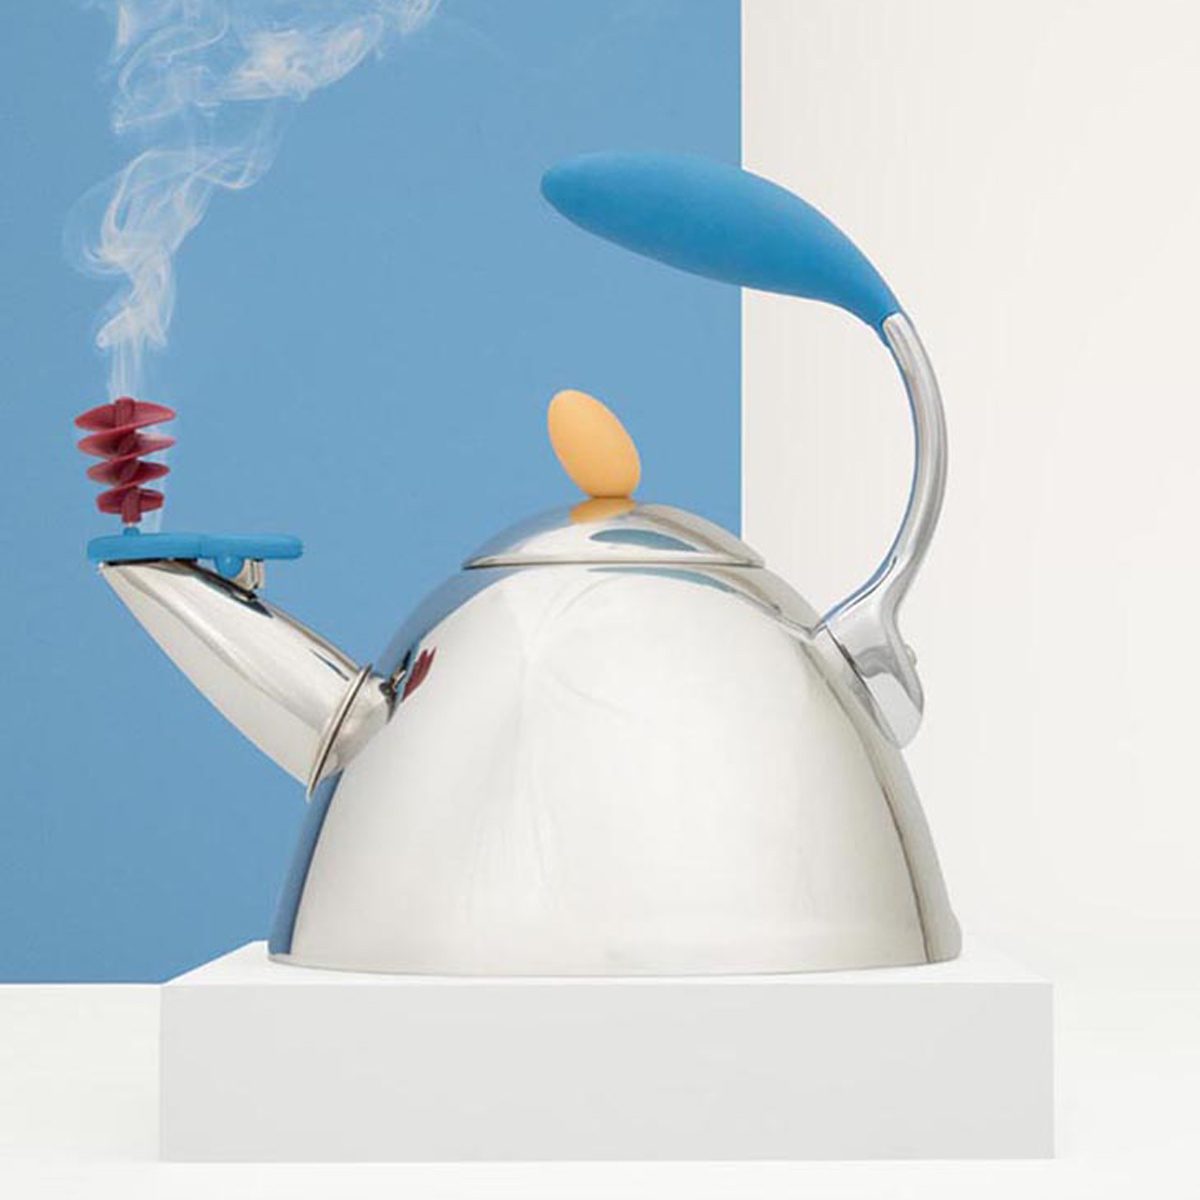 iconic tea kettle